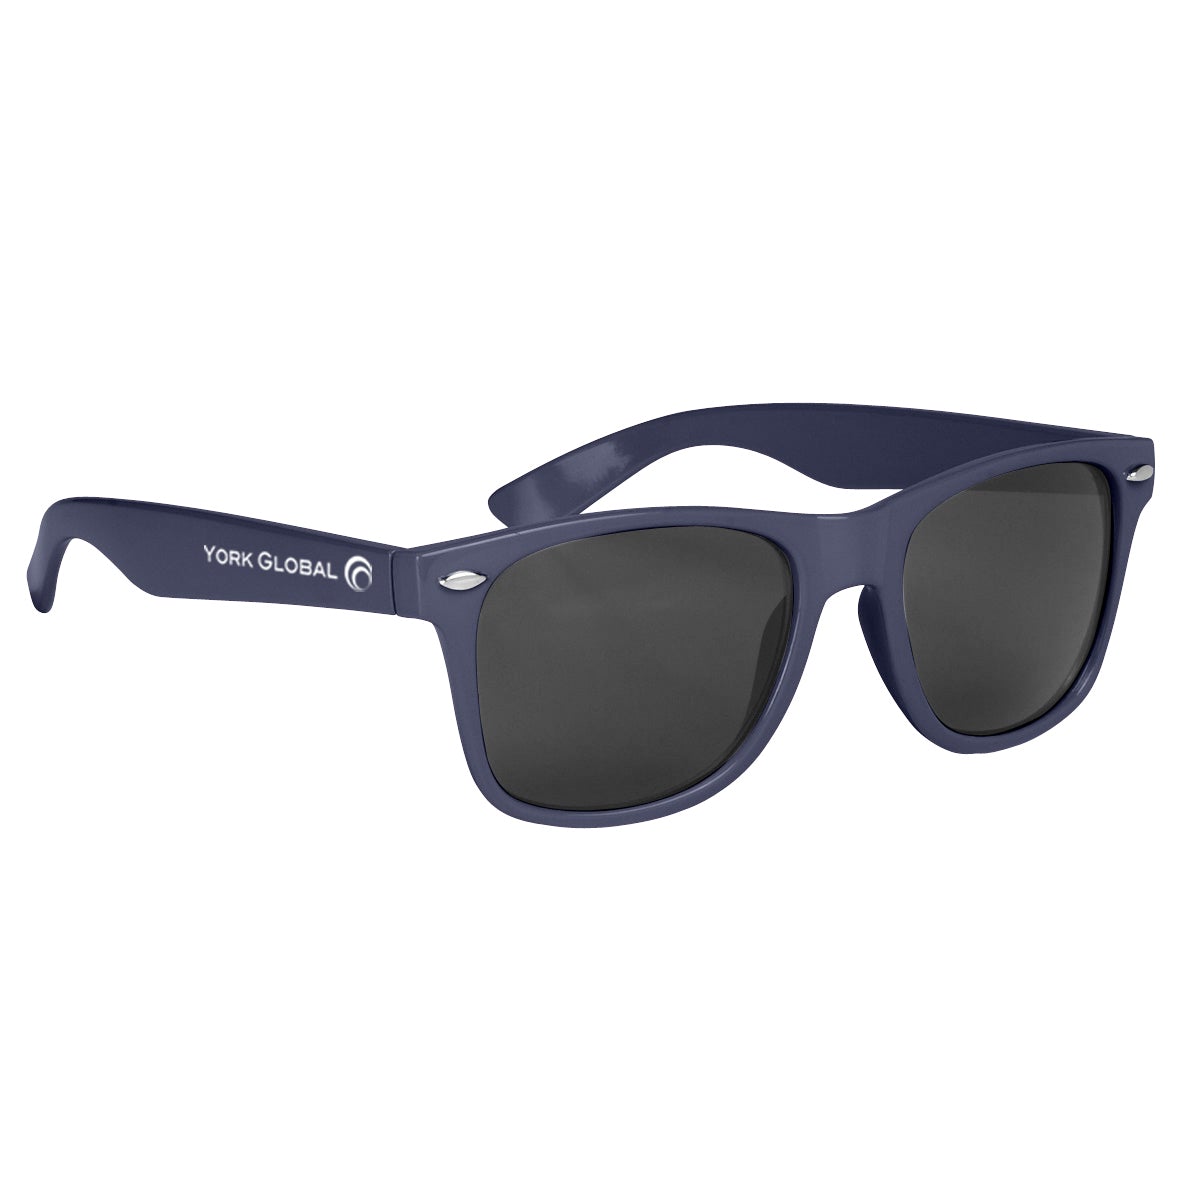 Malibu Sunglasses Sunglasses Hit Promo Navy Single Color 